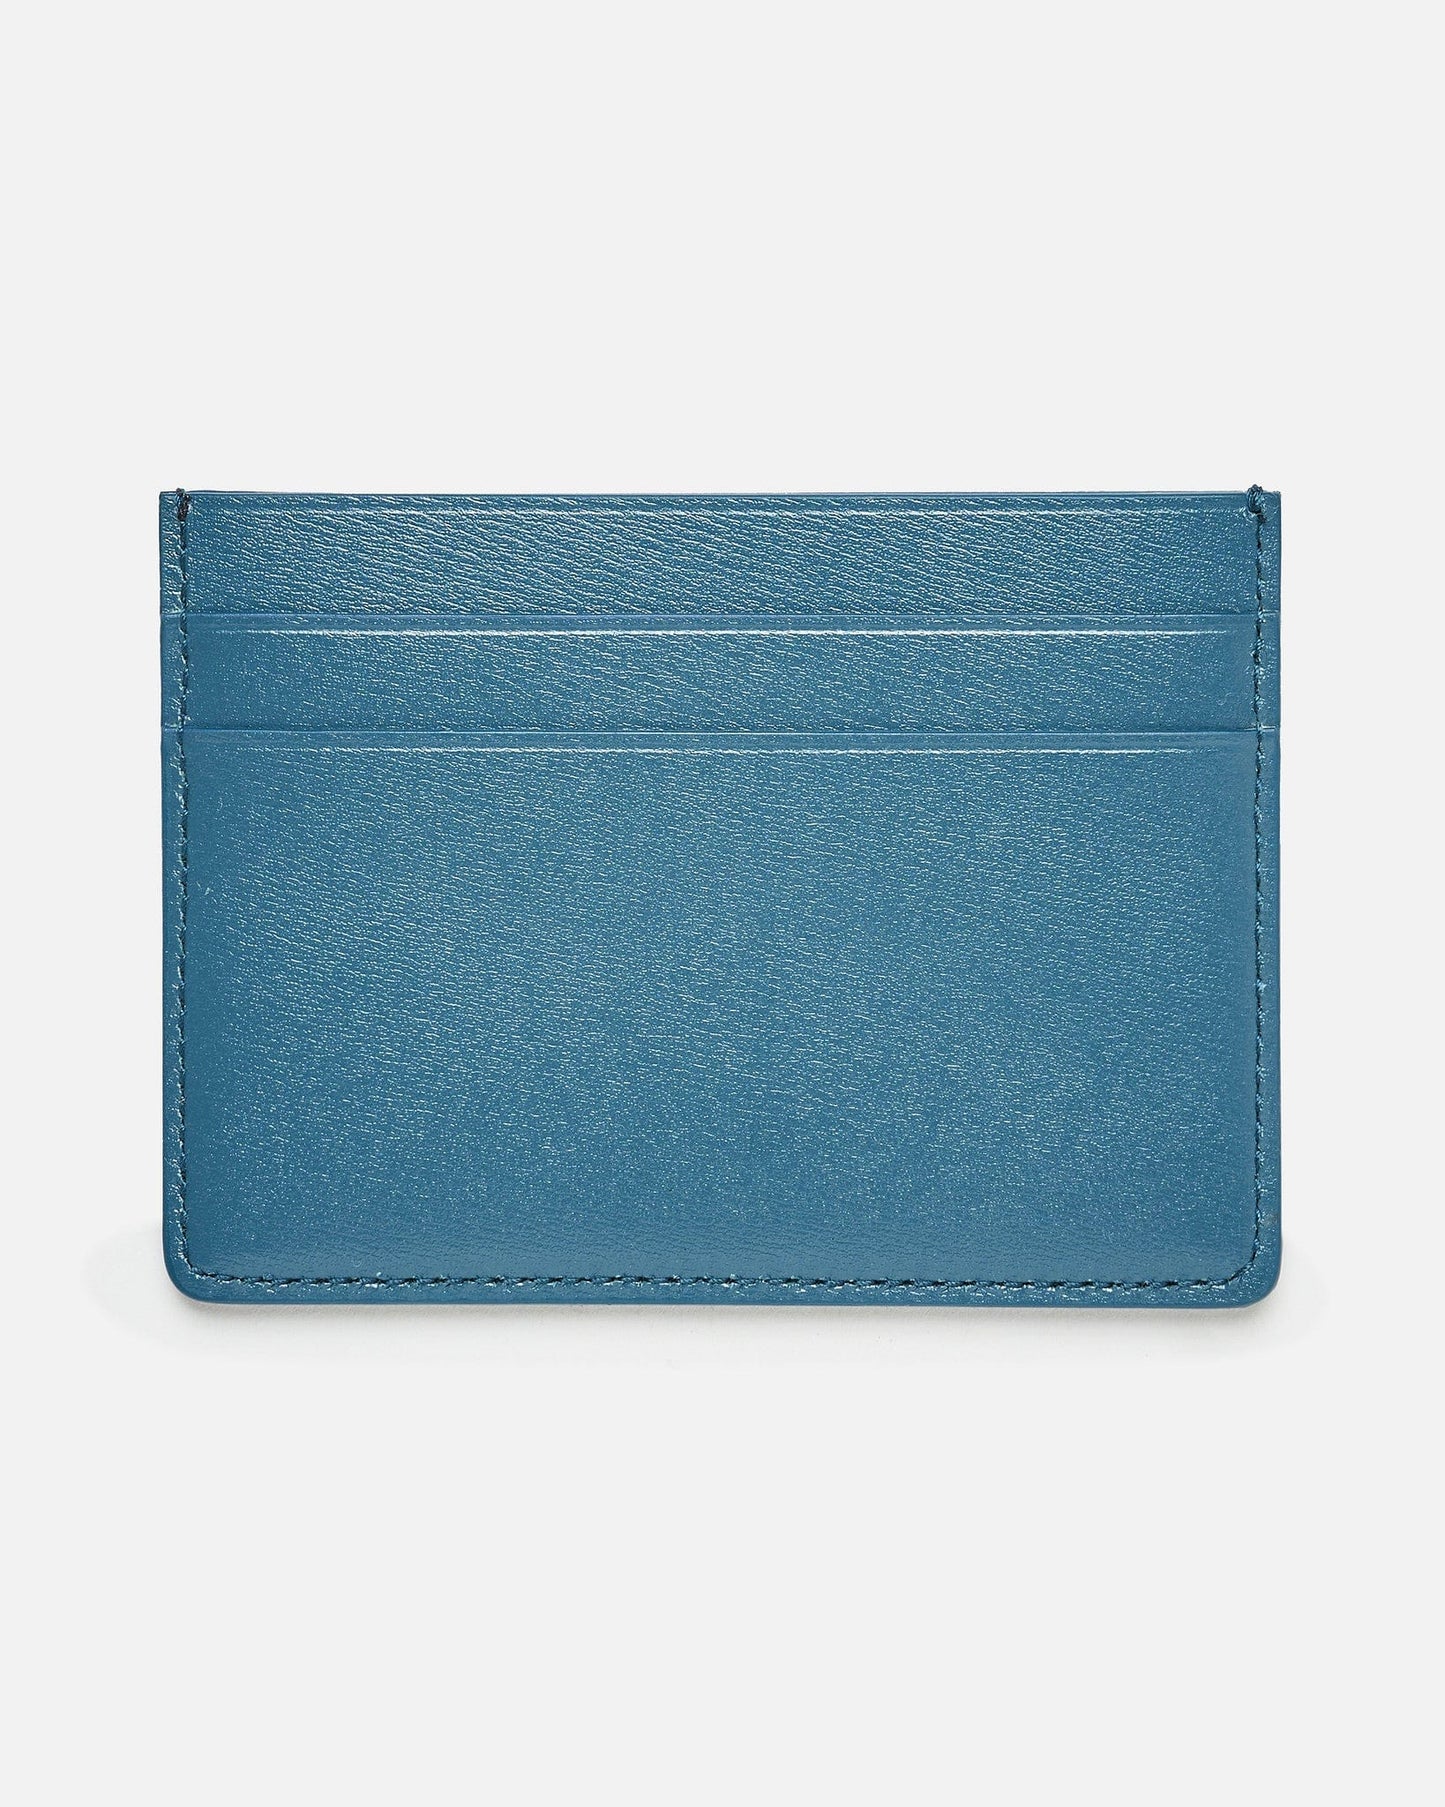 Jil Sander Leather Goods O/S Palmellato Leather Credit Card Holder in Sea Blue